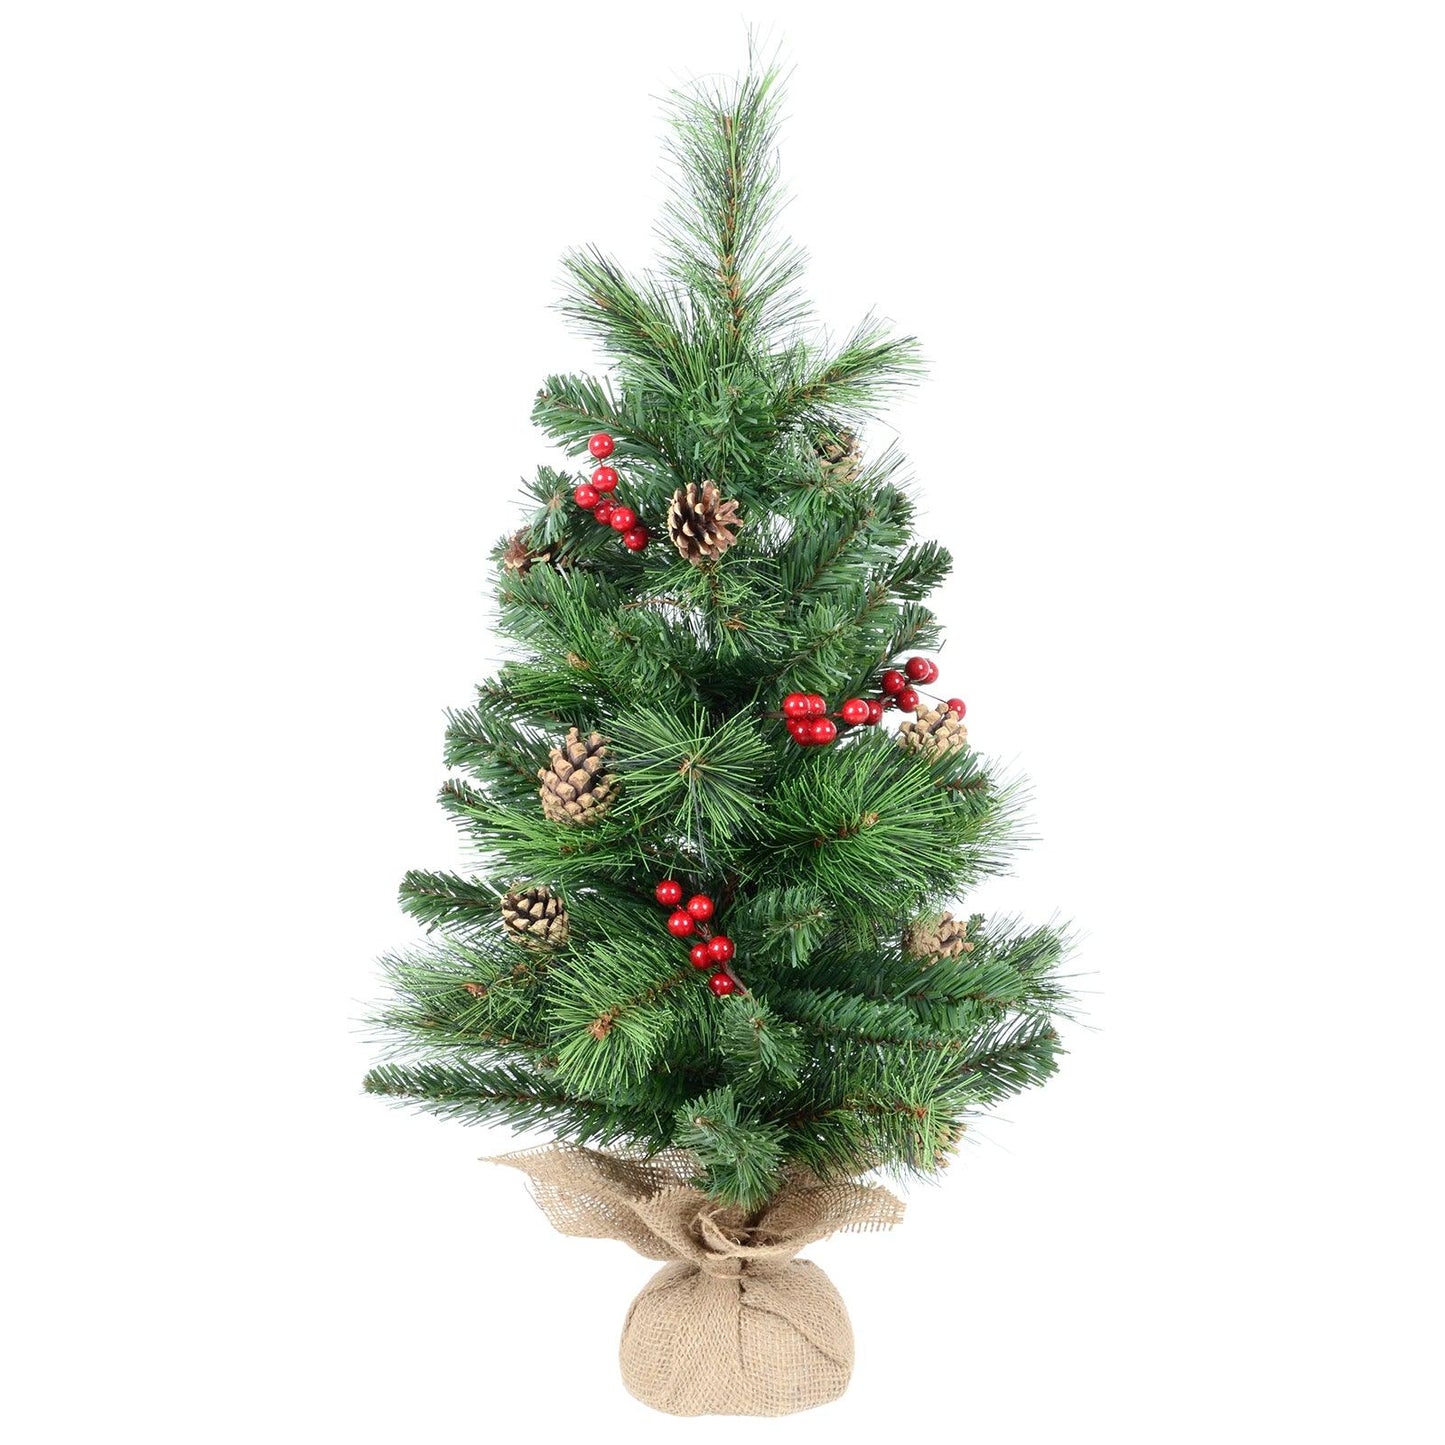 Mr Crimbo 2ft Mini Christmas Tree With Berries Pine Cones - MrCrimbo.co.uk -XS4350 - -christmas tree